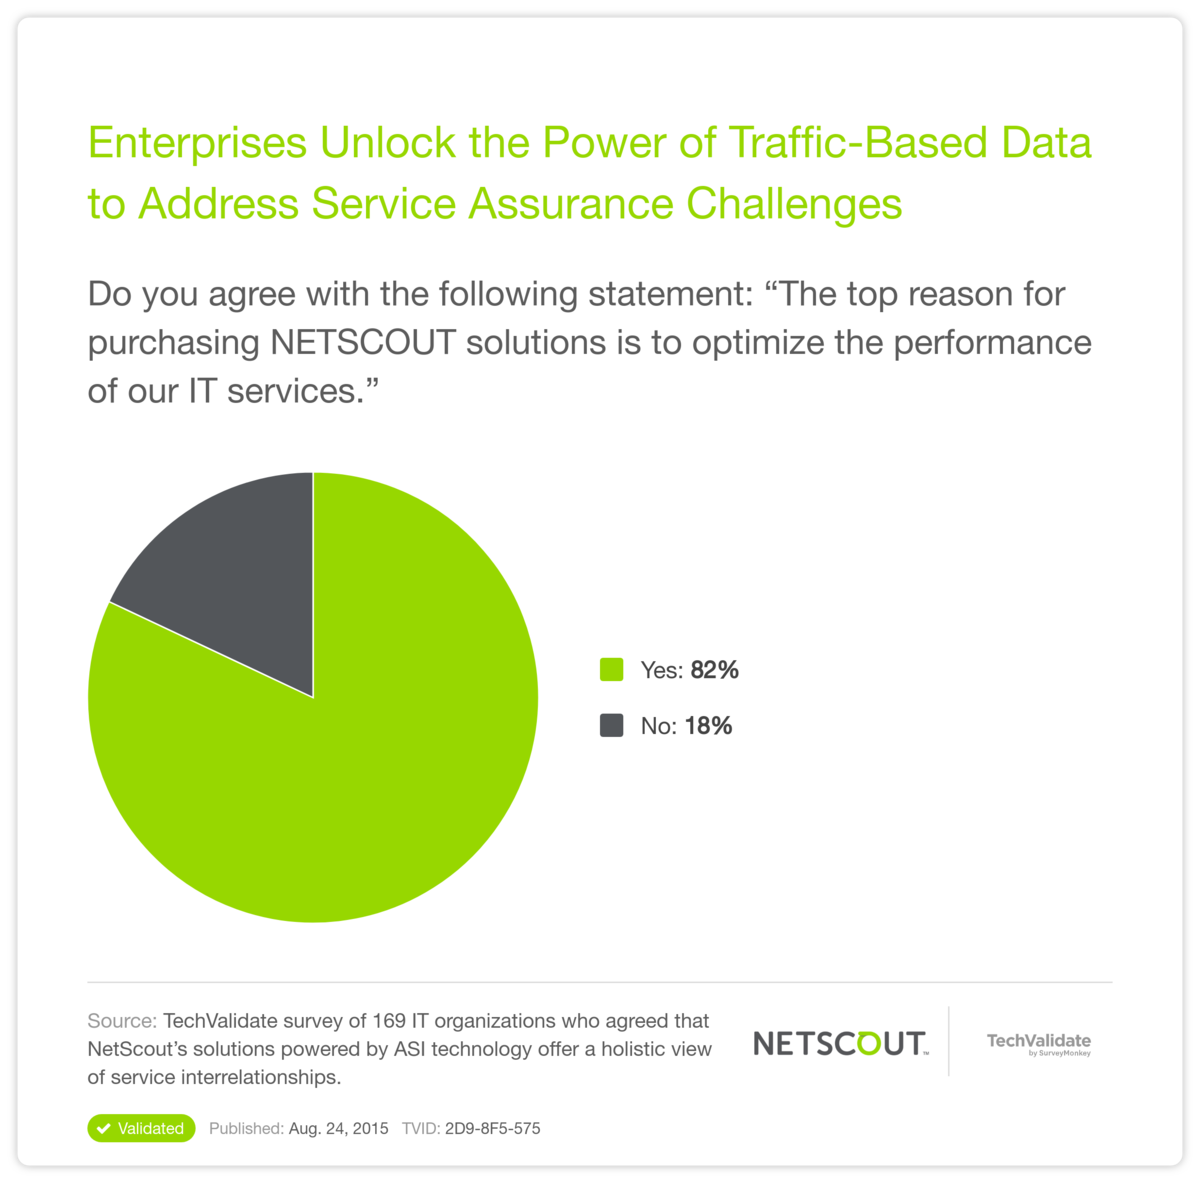 Enterprises Unlock the Power of Traffic-Based Data to Address Service Assurance Challenges